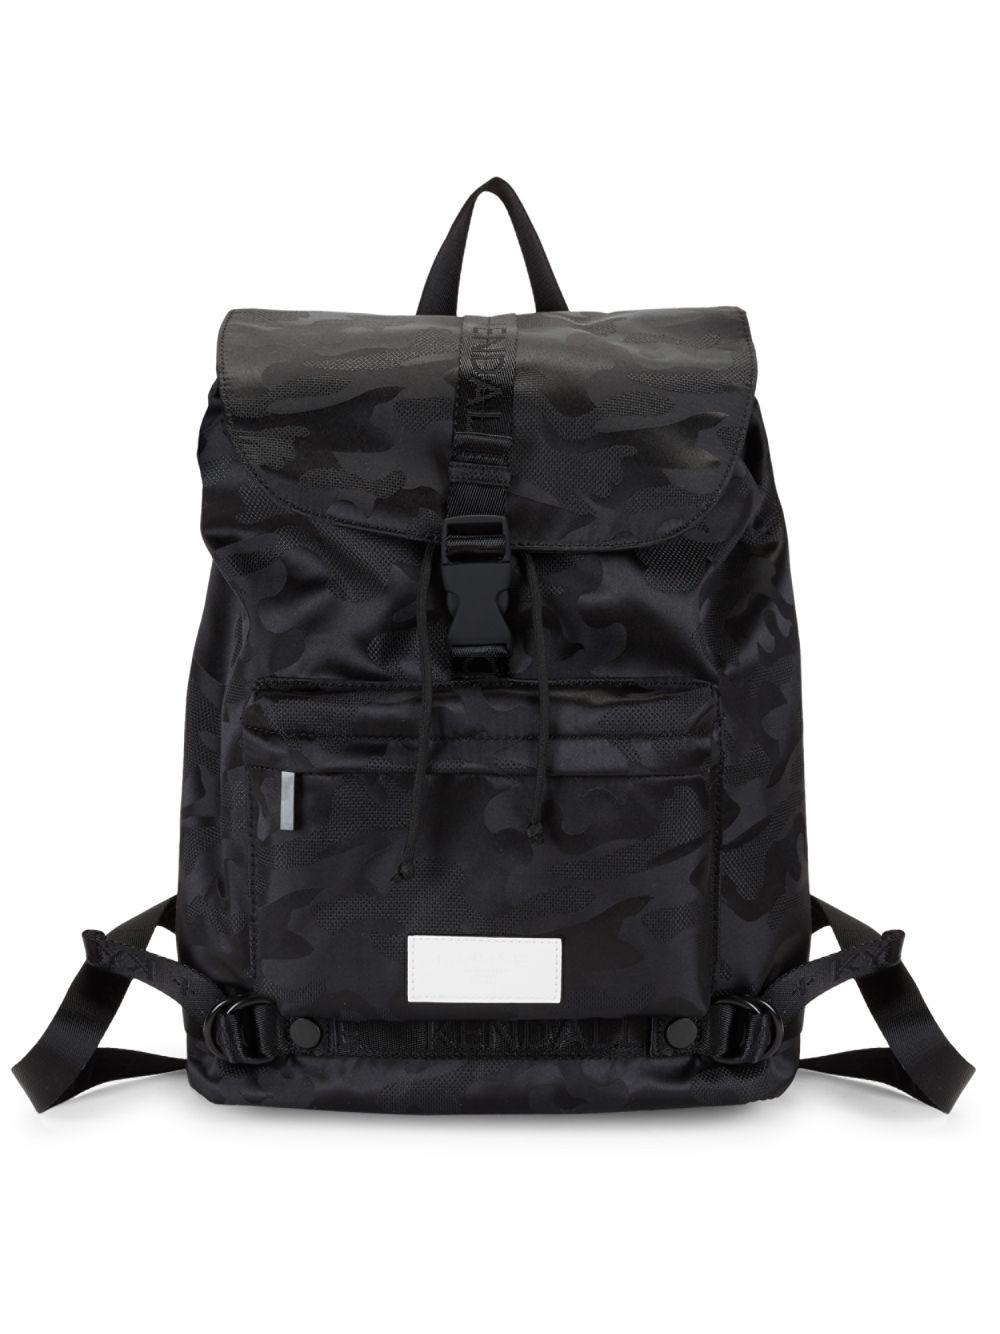 Kendall + Kylie Camo Printed Backpack in Black - Lyst